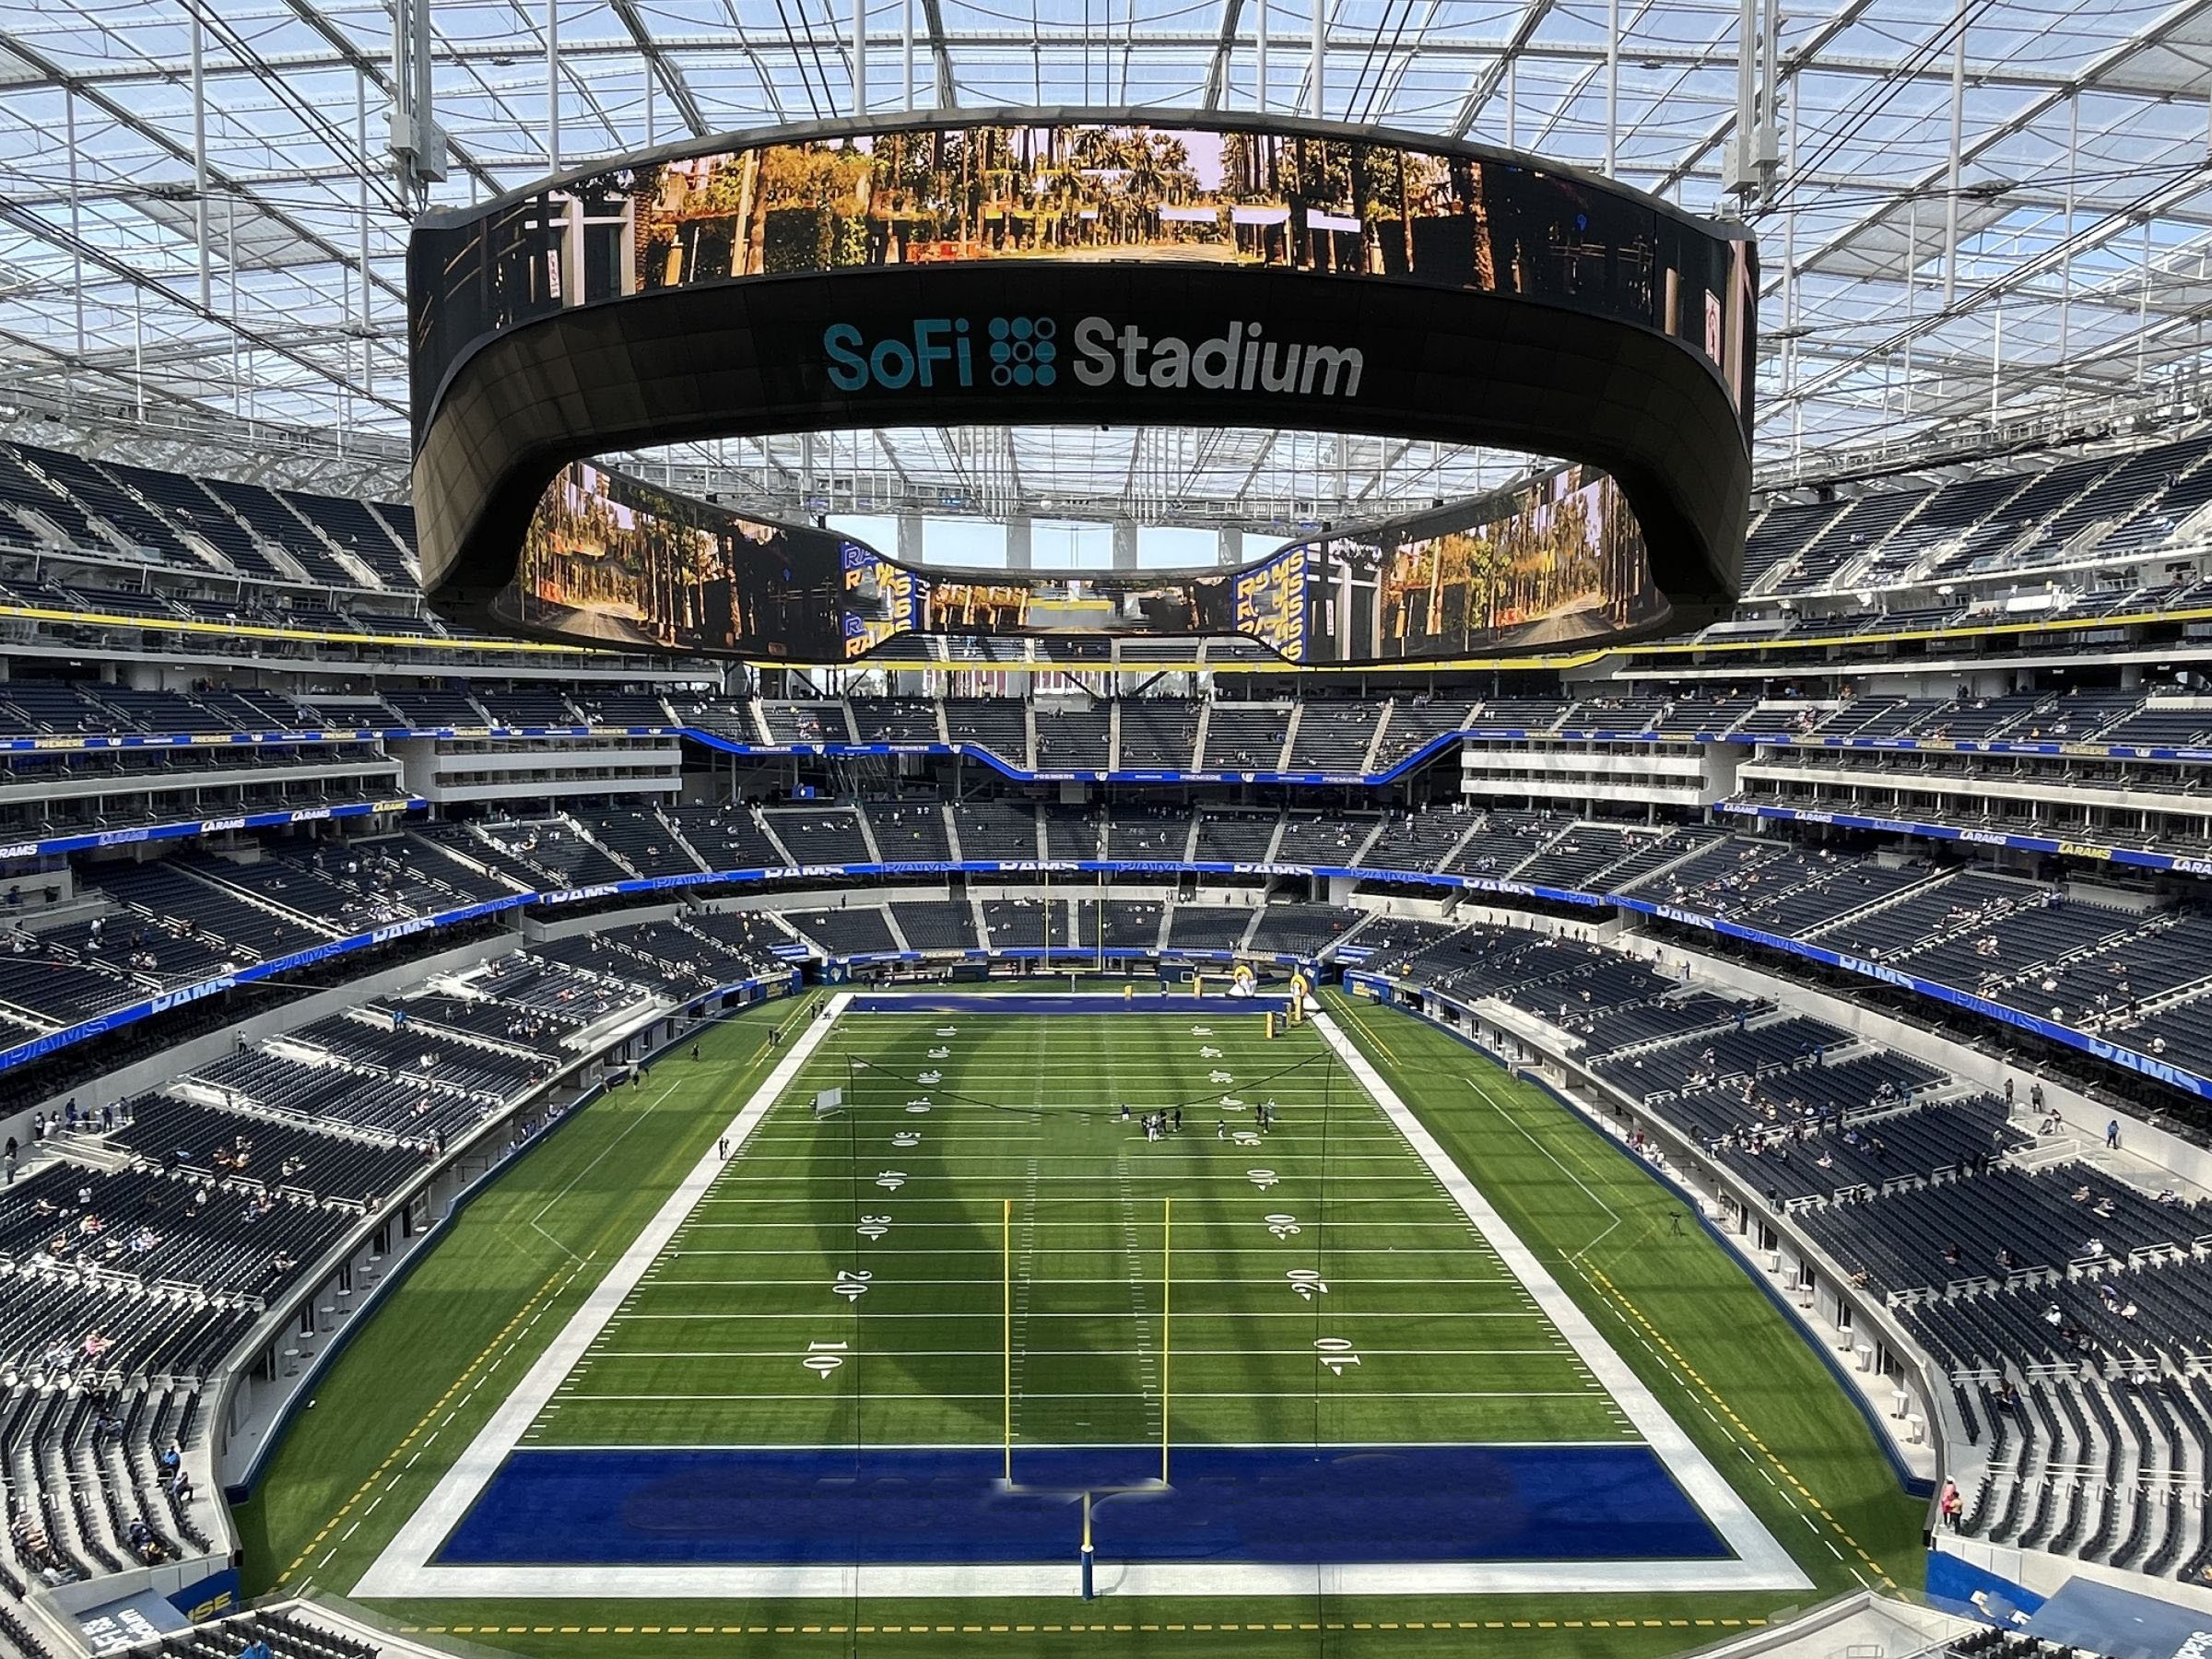 section 336, row 4 seat view  for football - sofi stadium